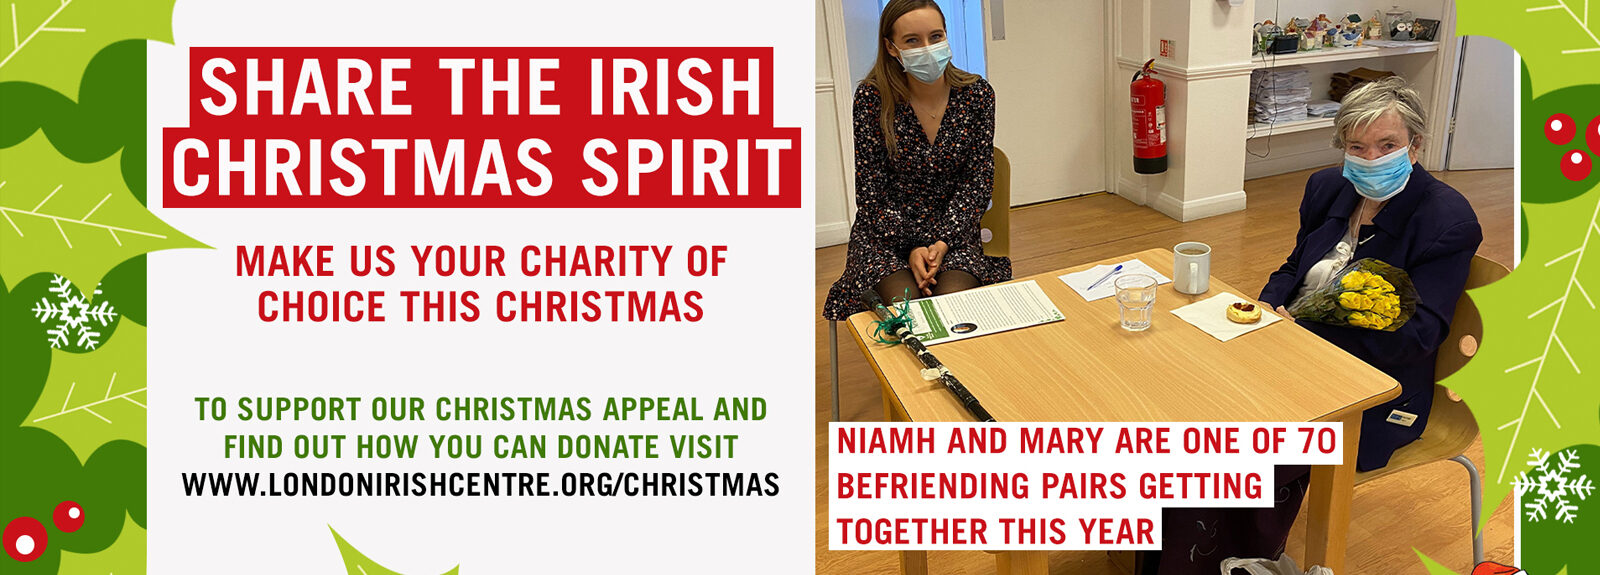 Donate to the London Irish this Christmas